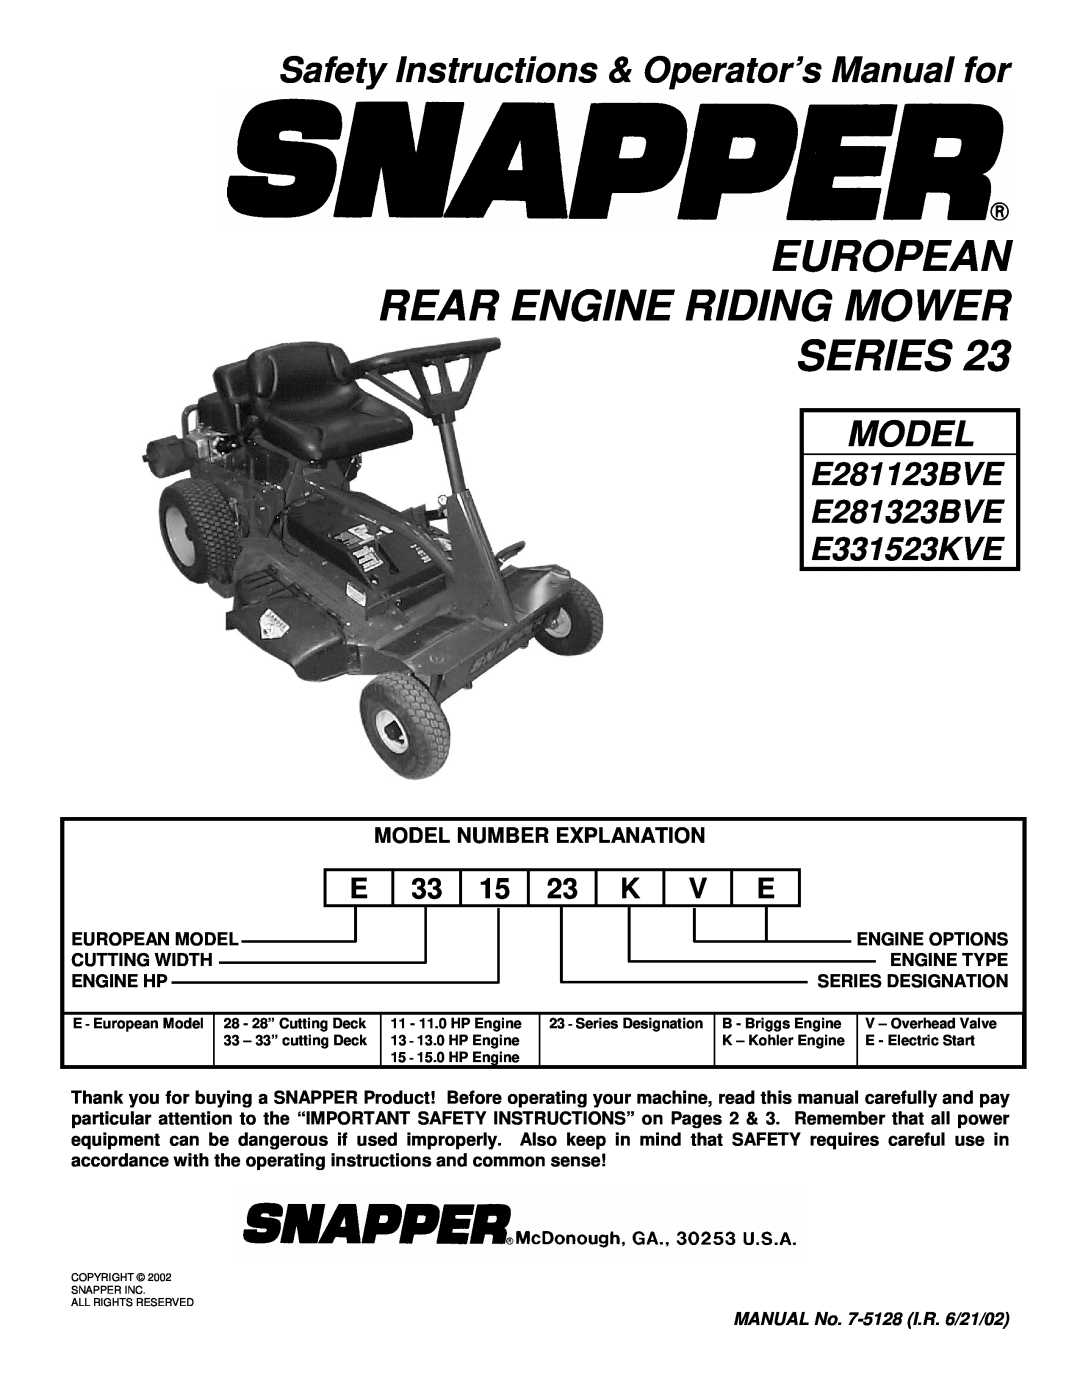 Snapper E281123BVE, E281323BVE, E331523KVE important safety instructions European Rear Engine Riding Mower Series, Model 